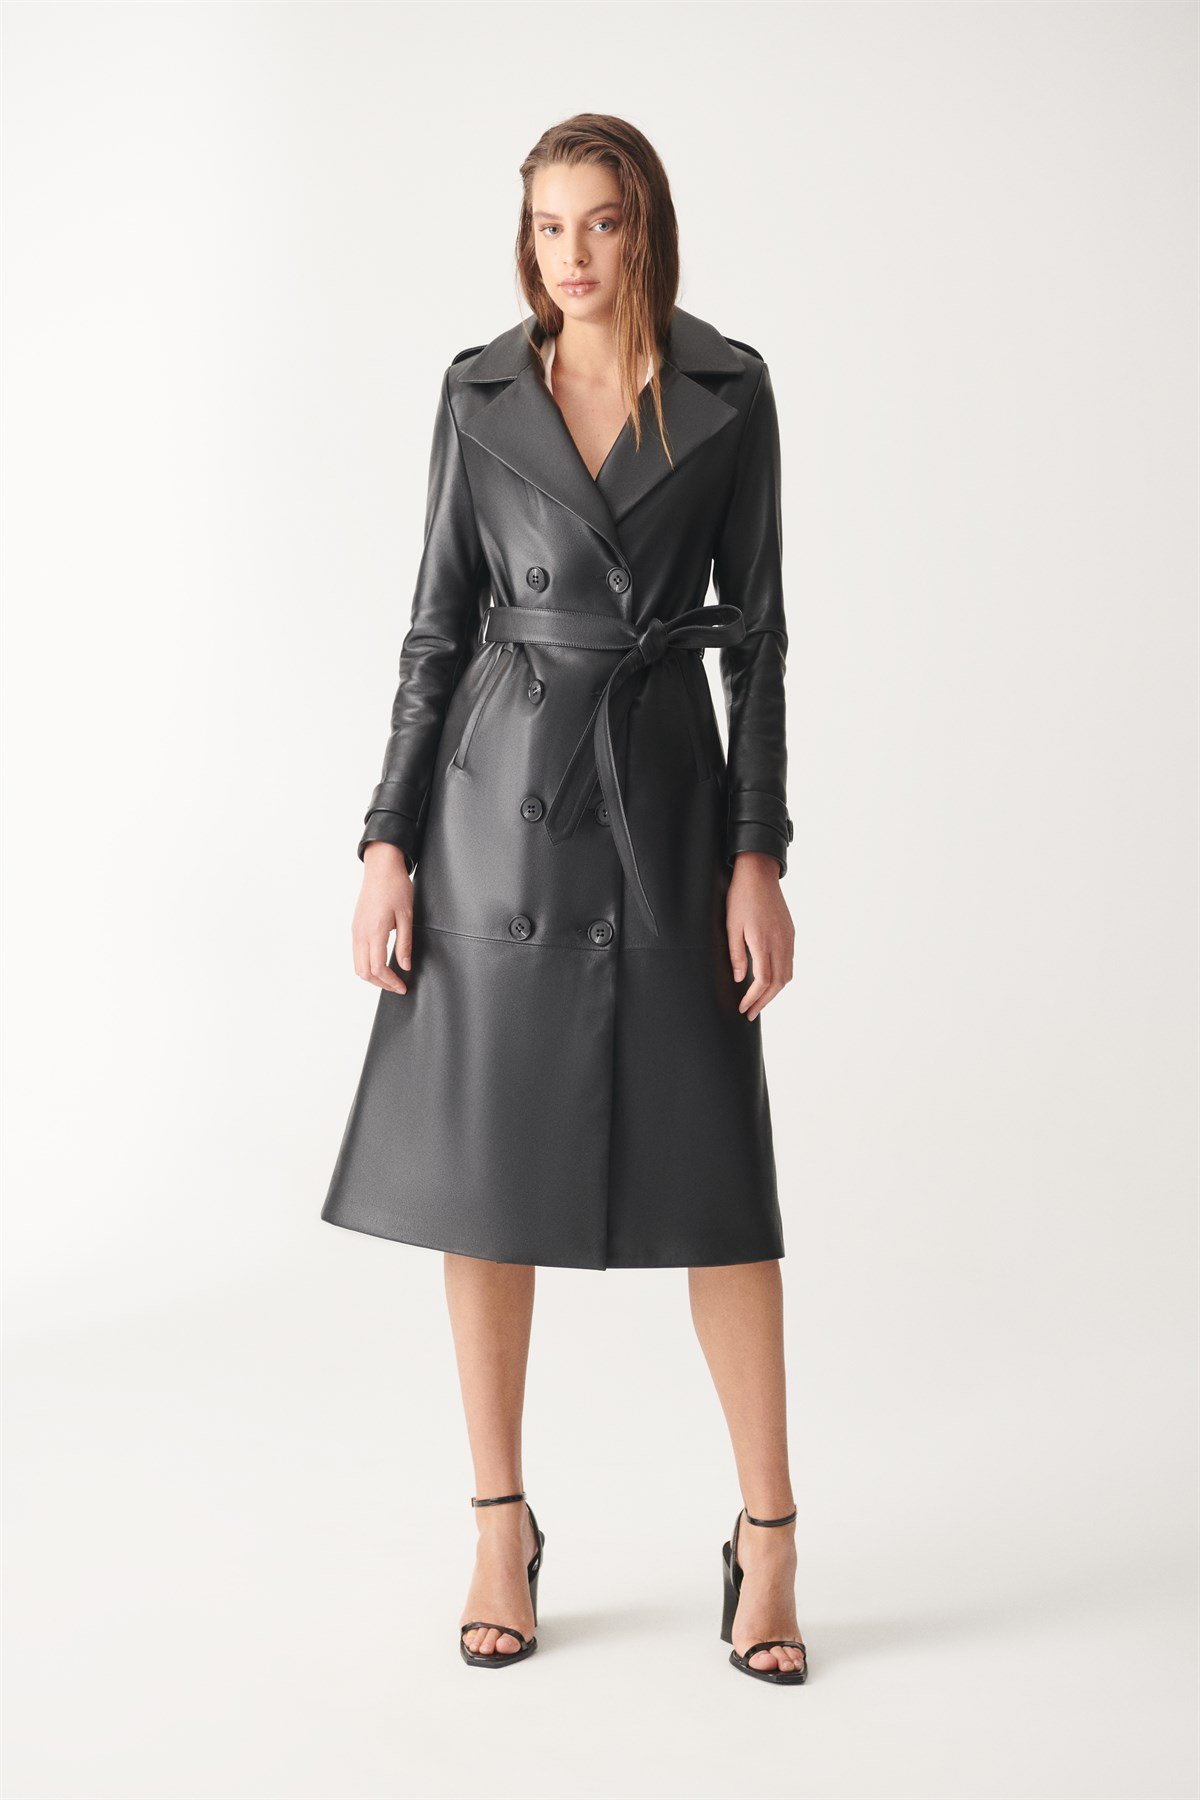 JESICA Black Trench Coat Leather Coat | Women's Leather Jacket Models